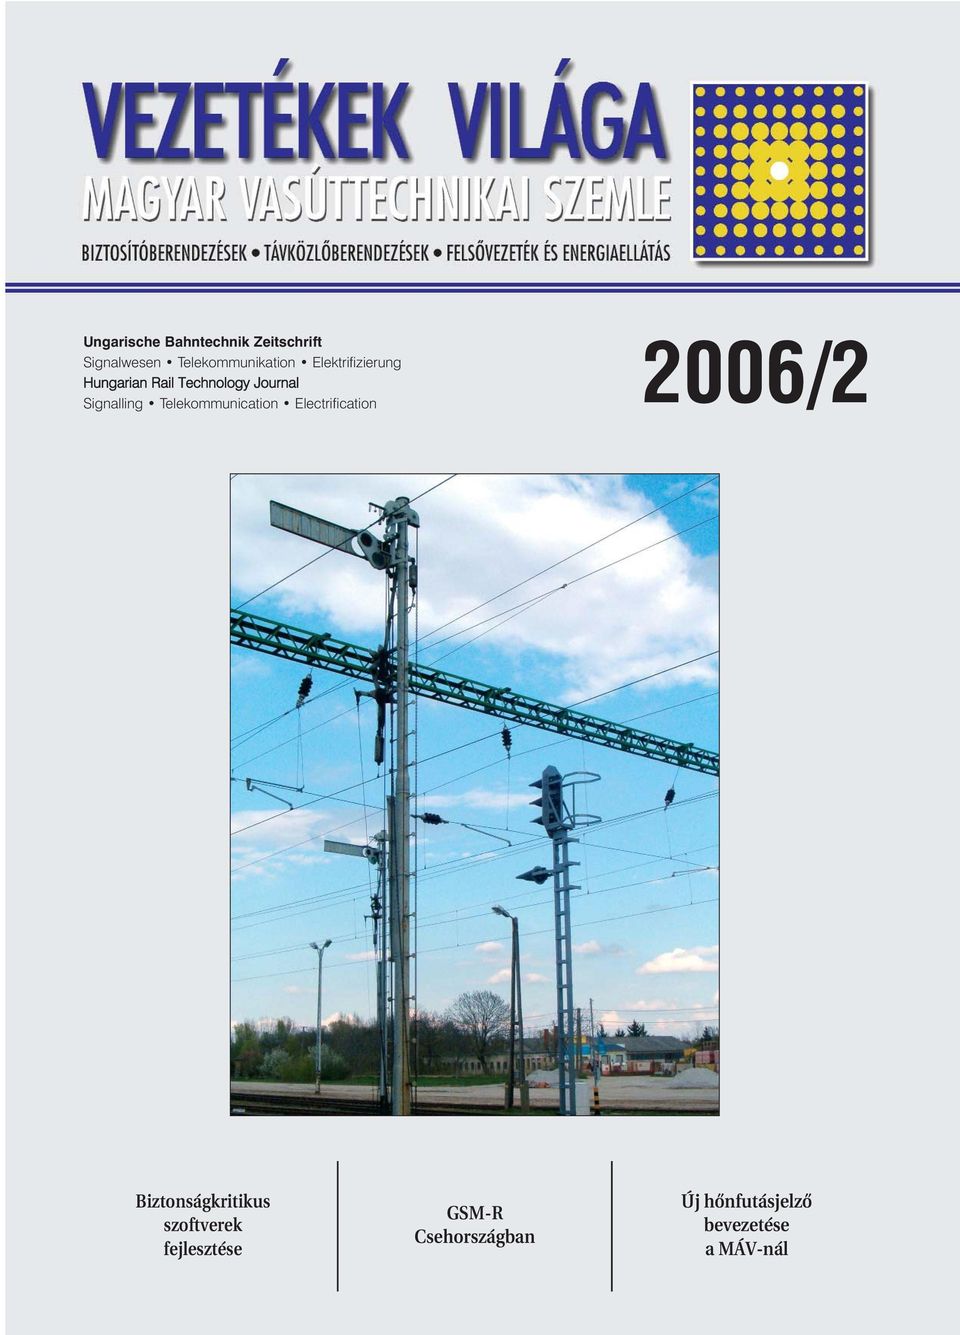 Telekommunication Electrification 2006/2 Biztonságkritikus